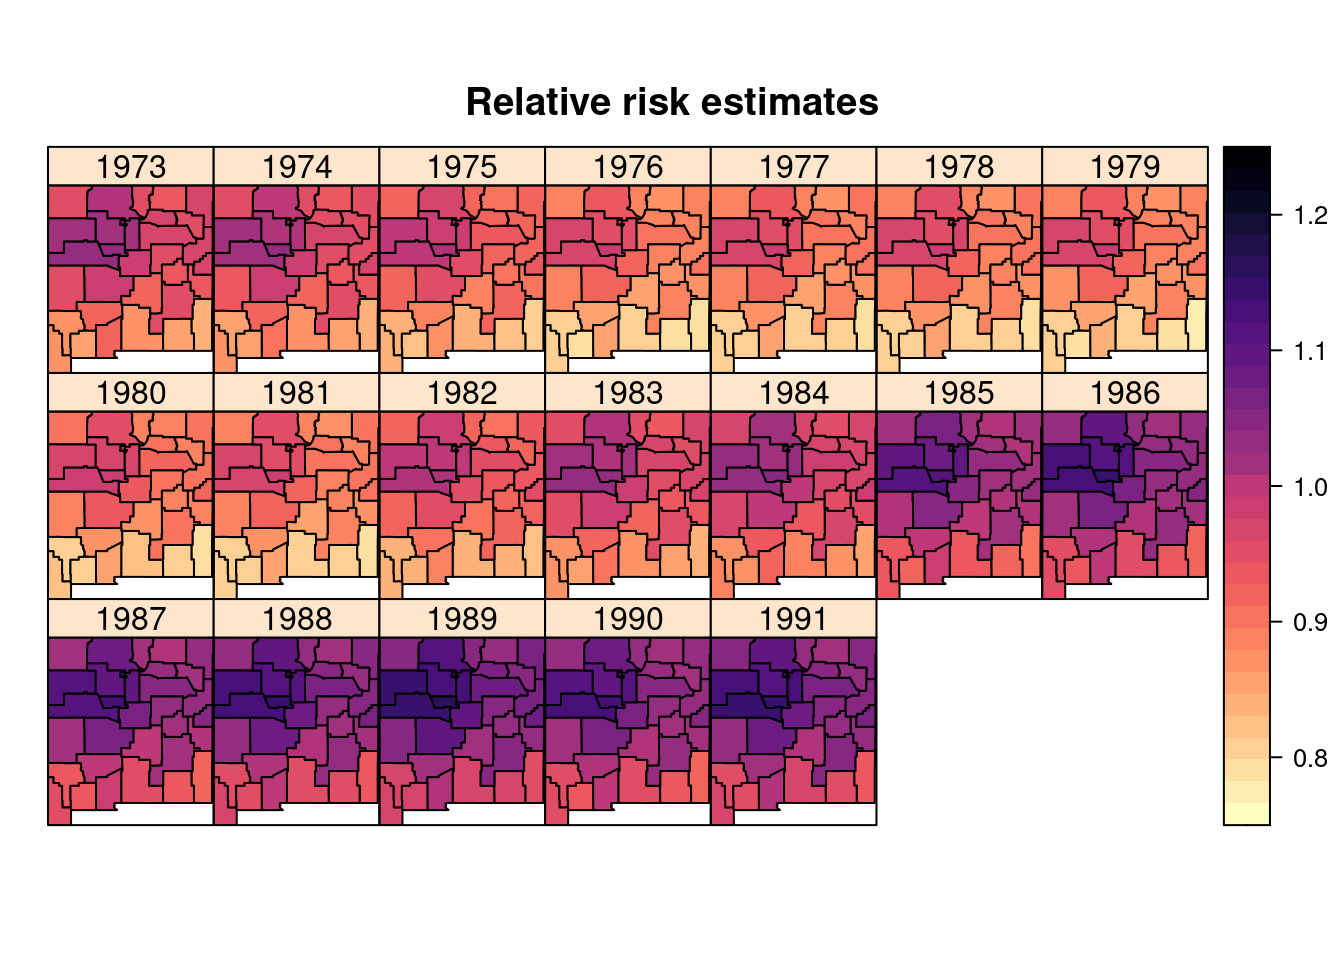 Posterior means of the relative risk estimate on the brainNM dataset.